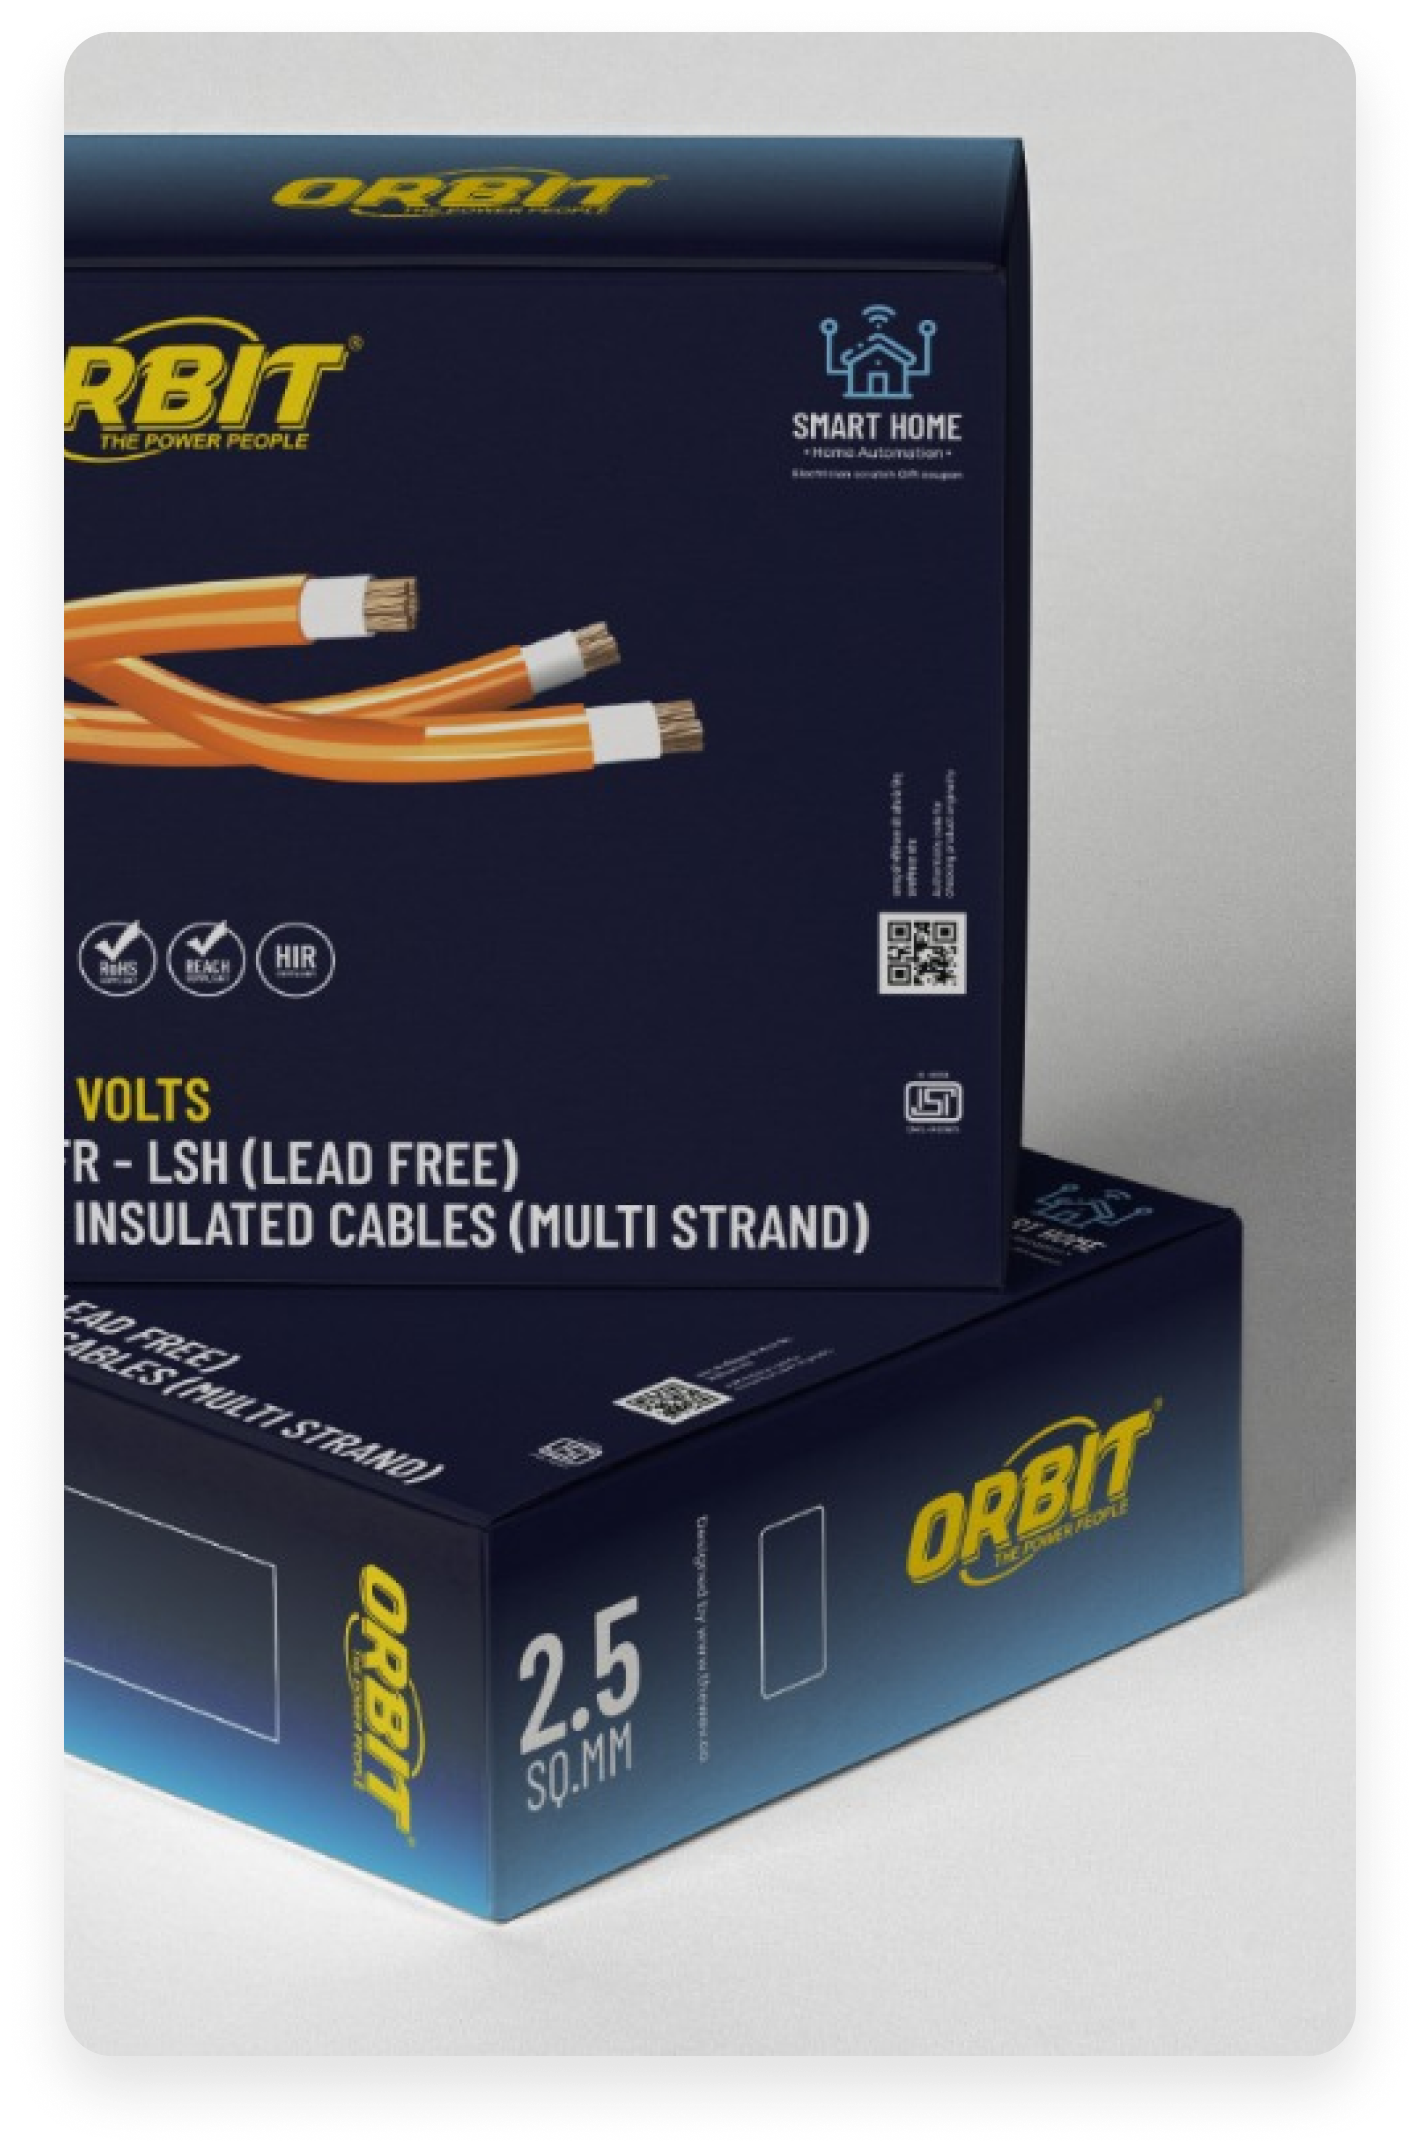 Orbit Cables